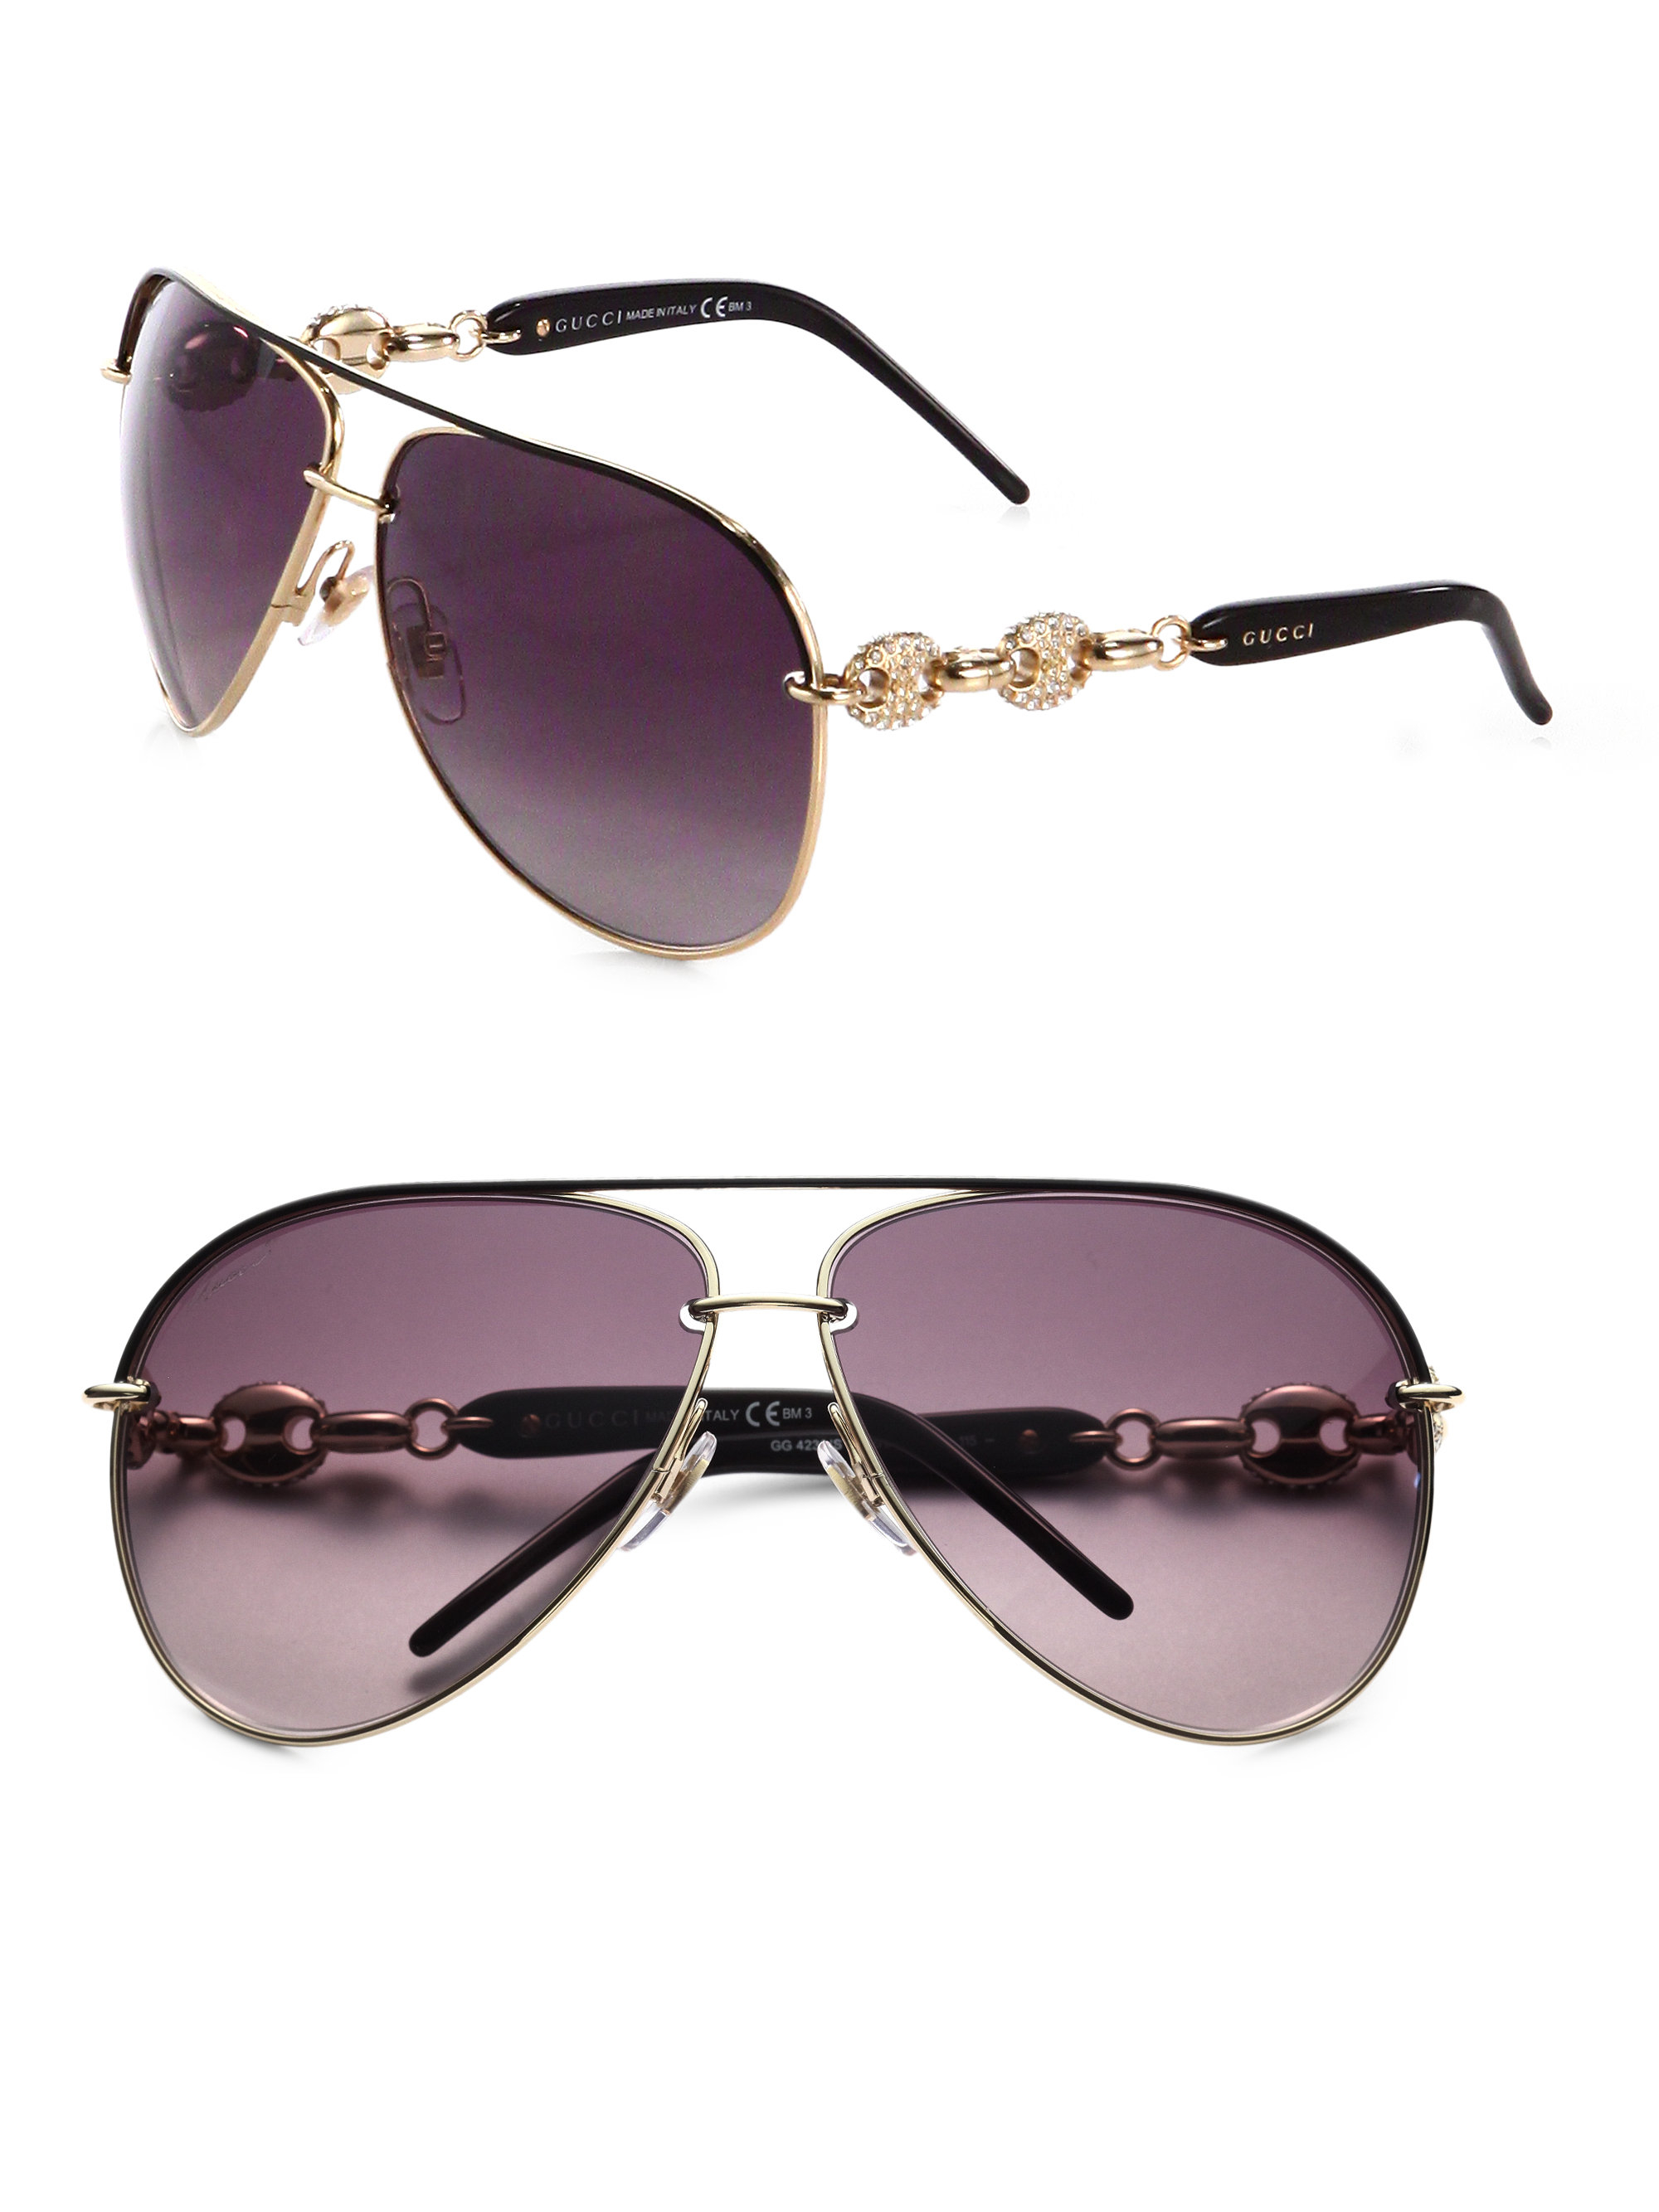 Lyst - Gucci Embellished Aviator Sunglasses in Metallic